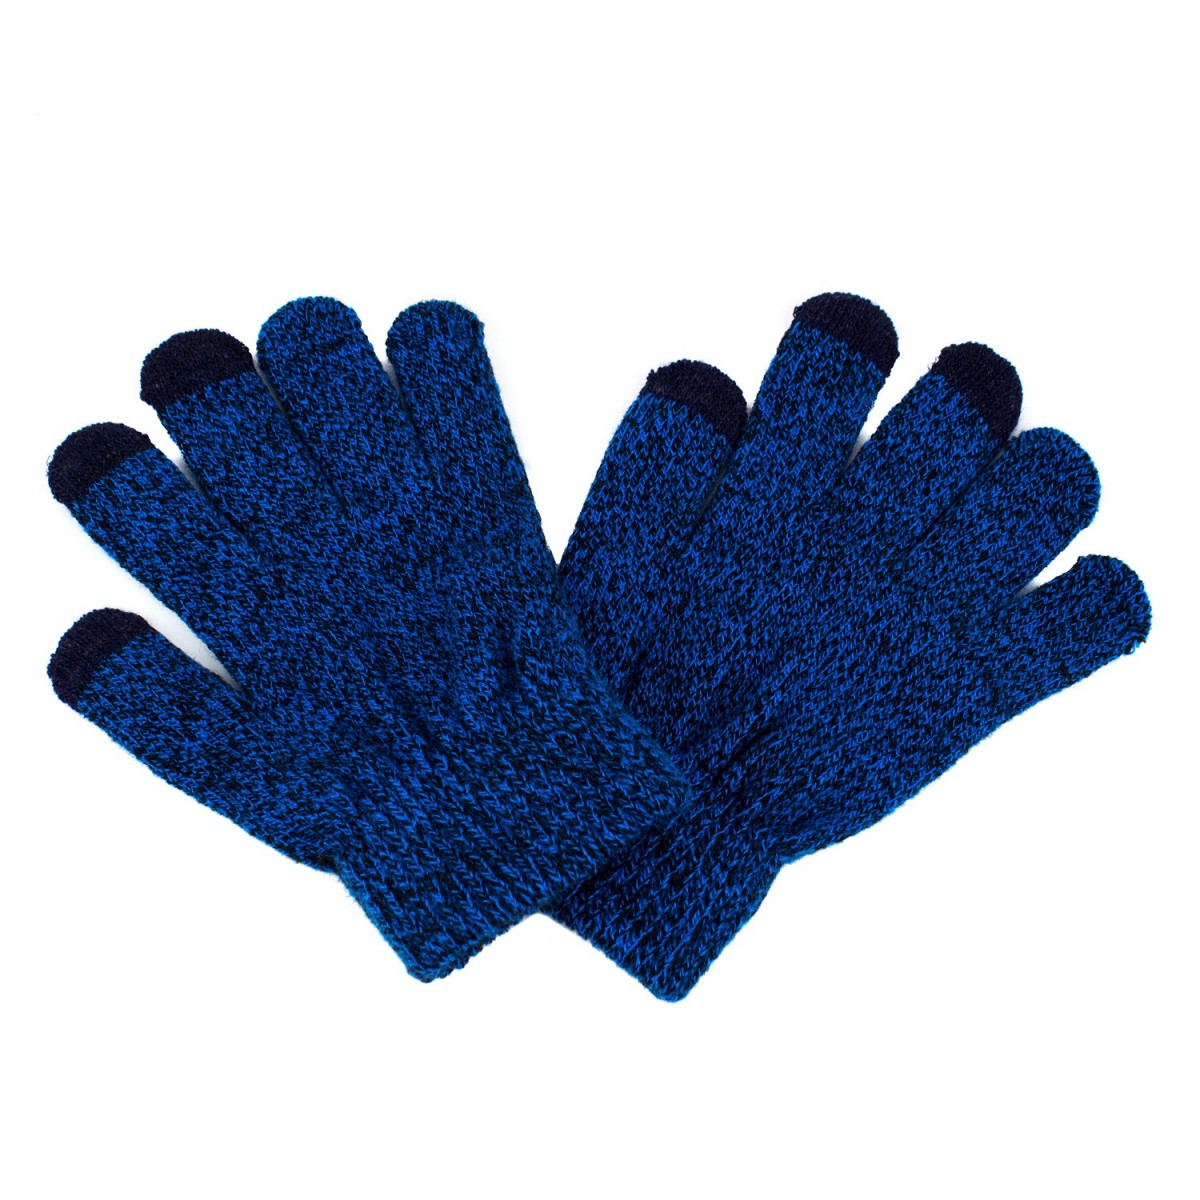 Exclusive light's Alexander Graham Bell Manusi tricotate pentru baieti, MBA-720-159, Albastru